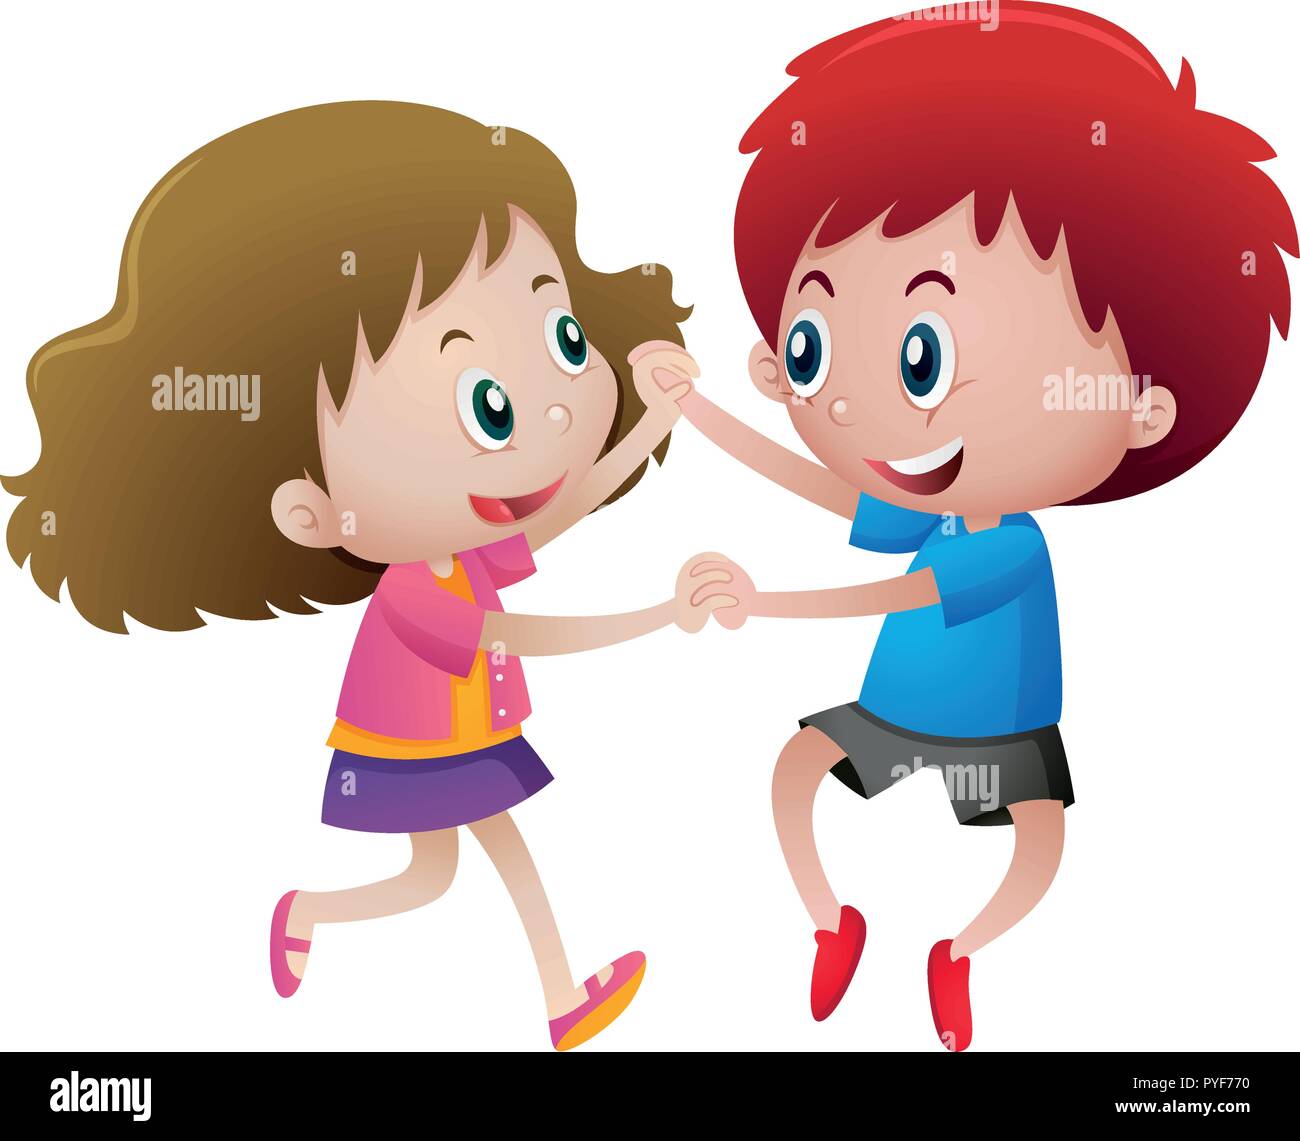 Two kids holding hands illustration Stock Vector